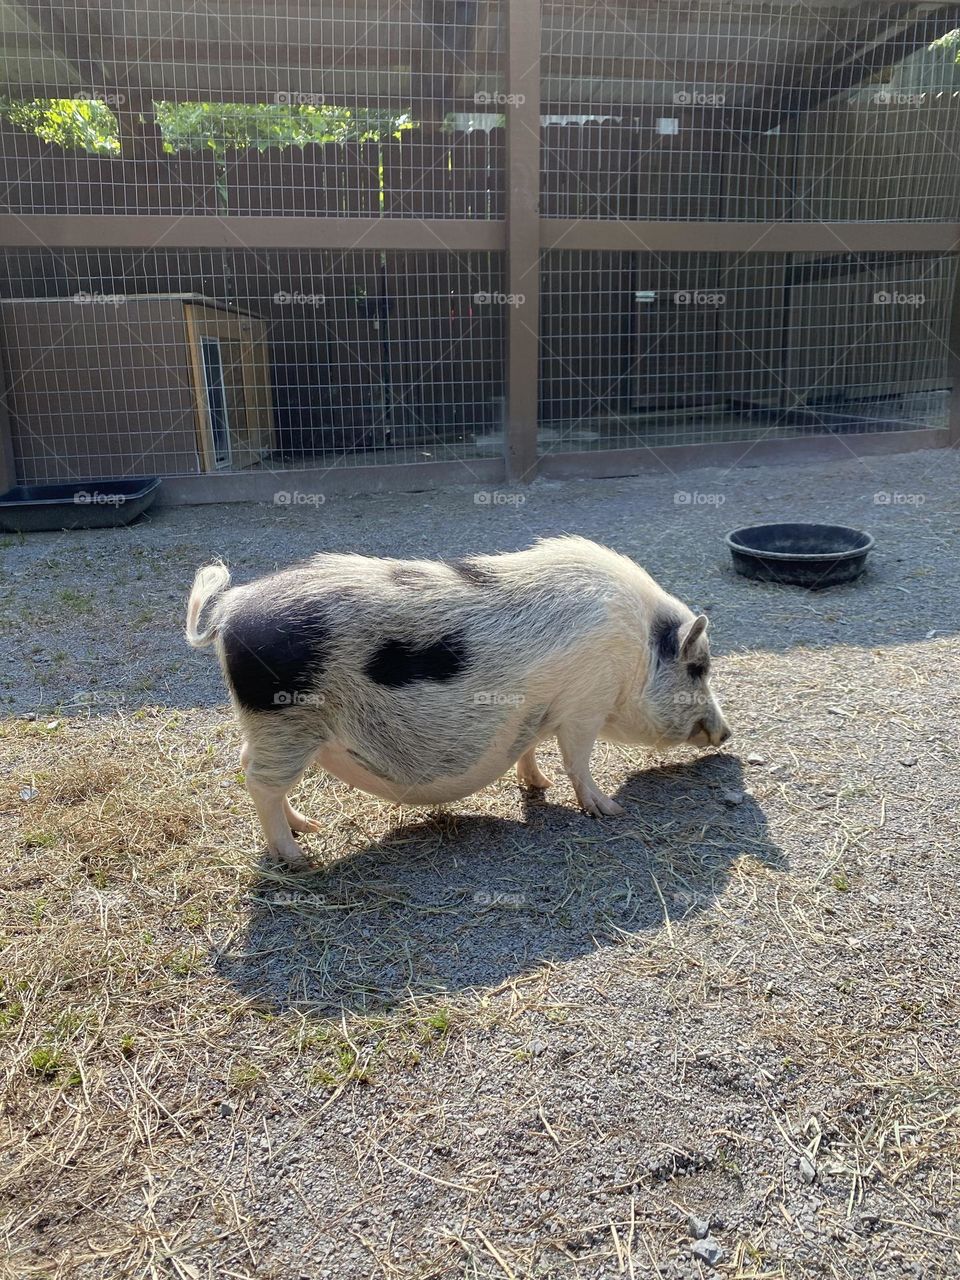 Pig at the Nashville zoo 